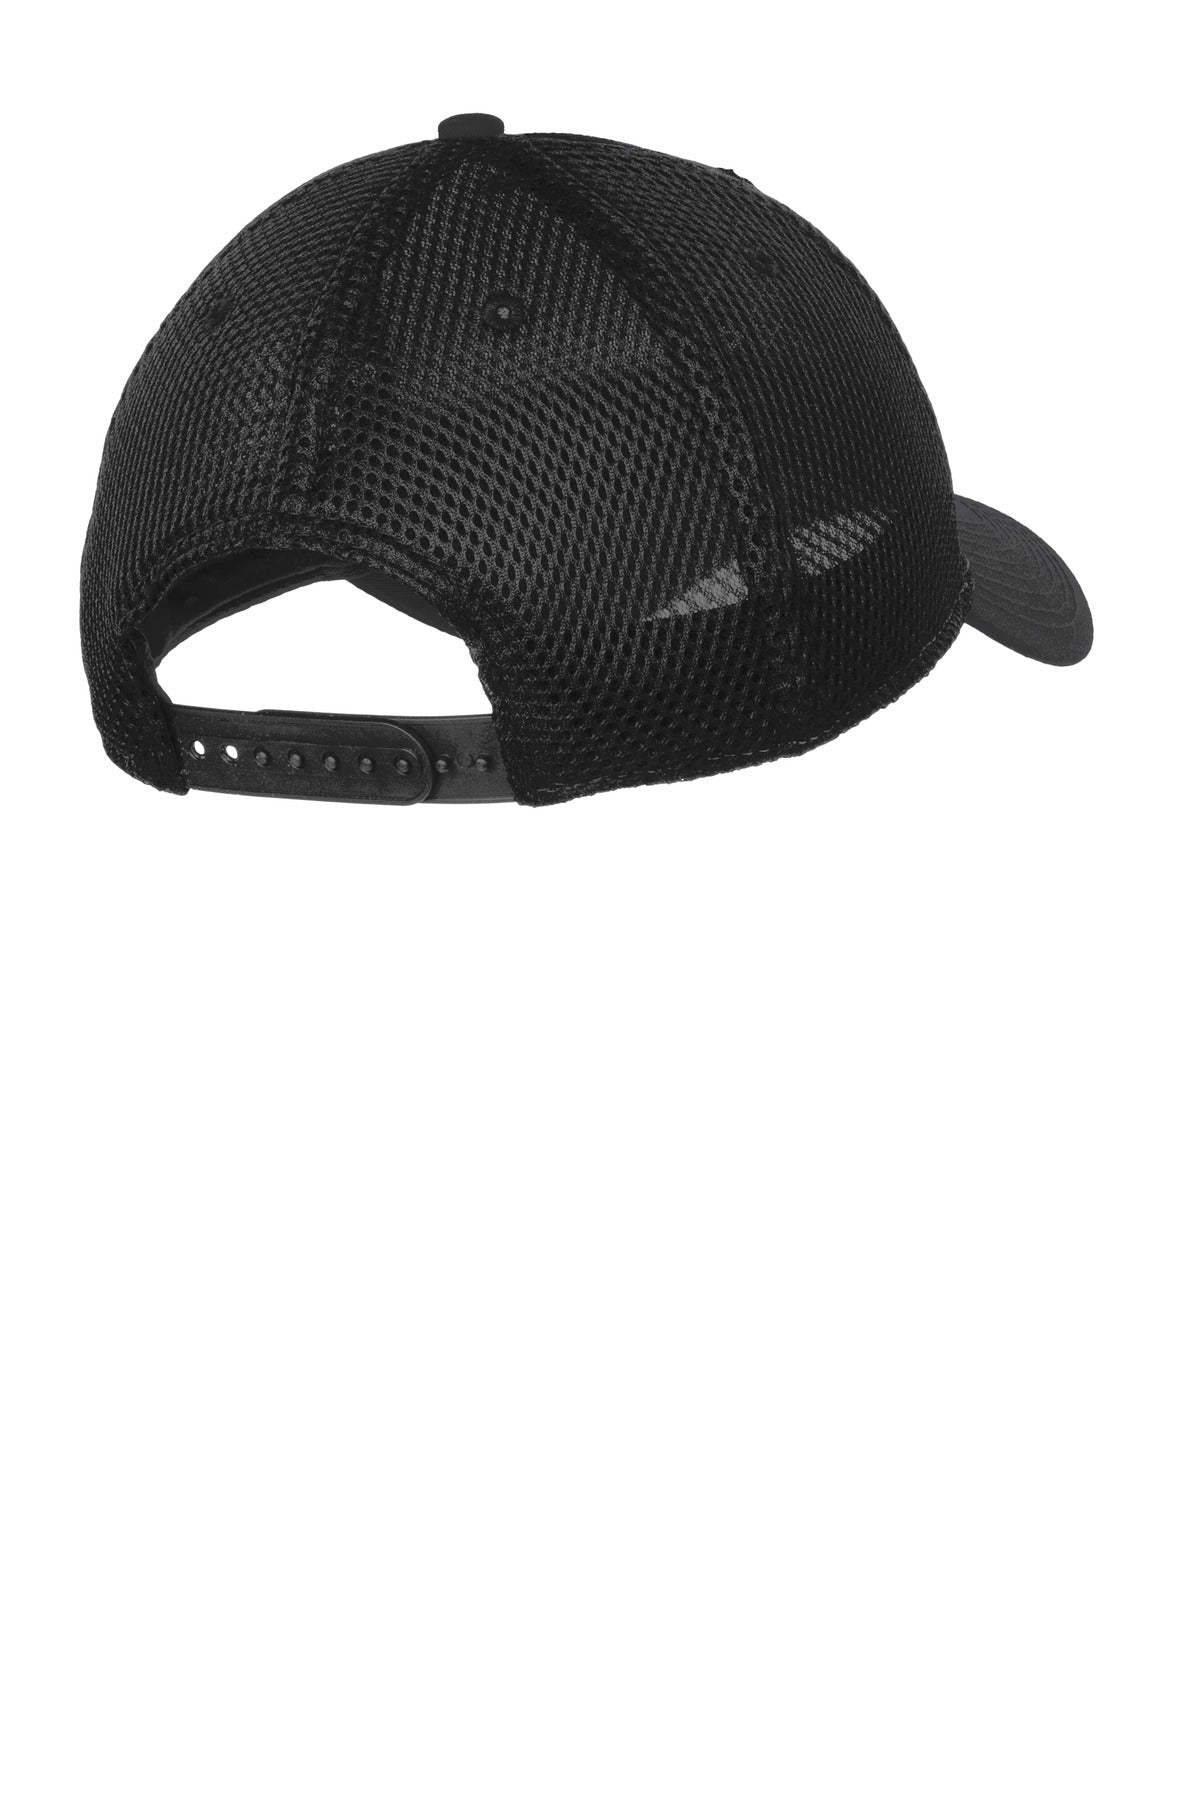 New Era® Snapback Contrast Front Mesh Cap. NE204 - DFW Impression